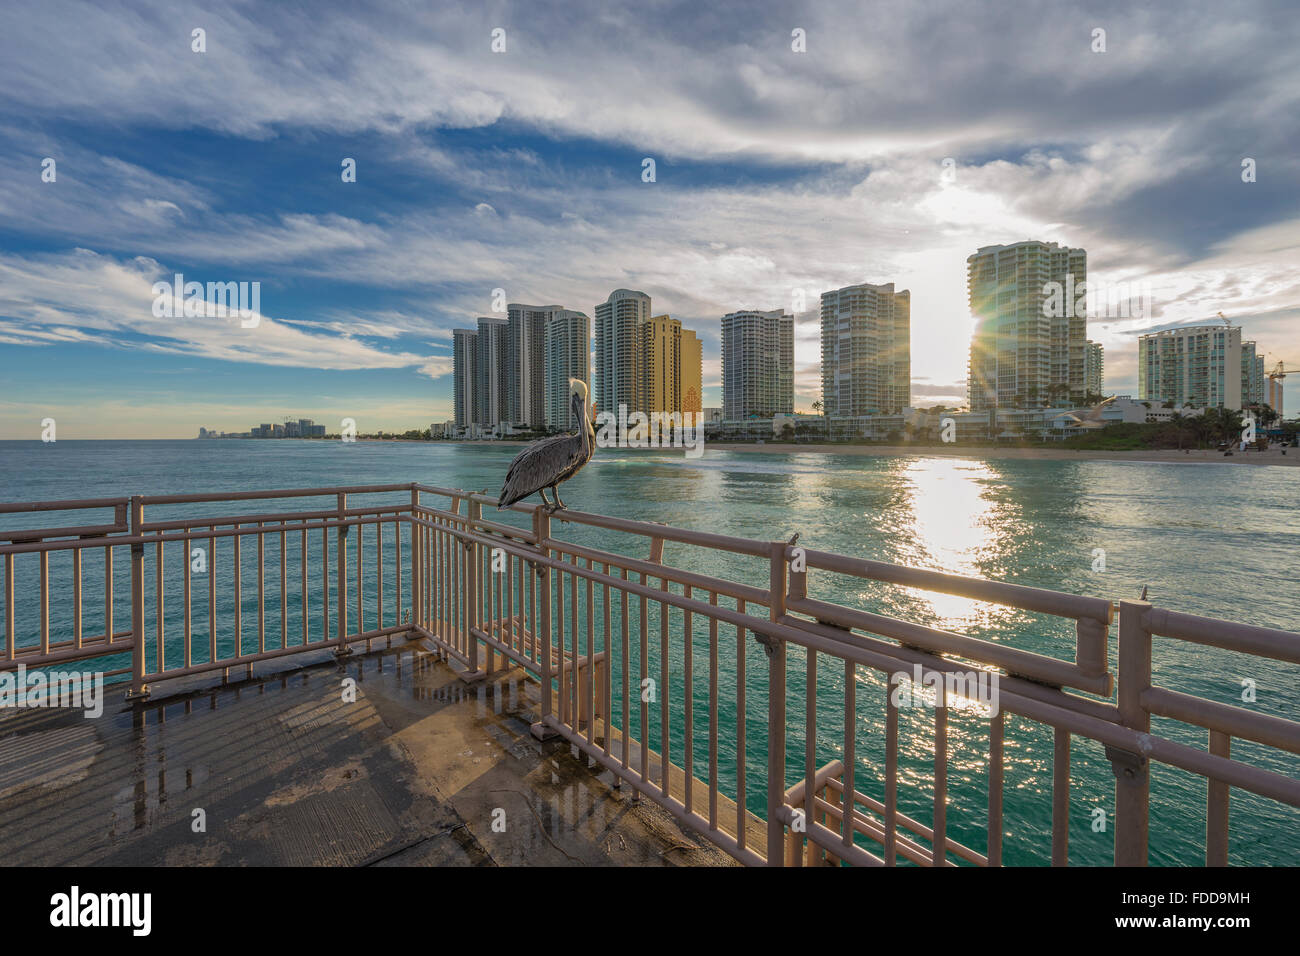 Sunny Isles Beach, Miami, Florida - Pelican in the pier Stock Photo